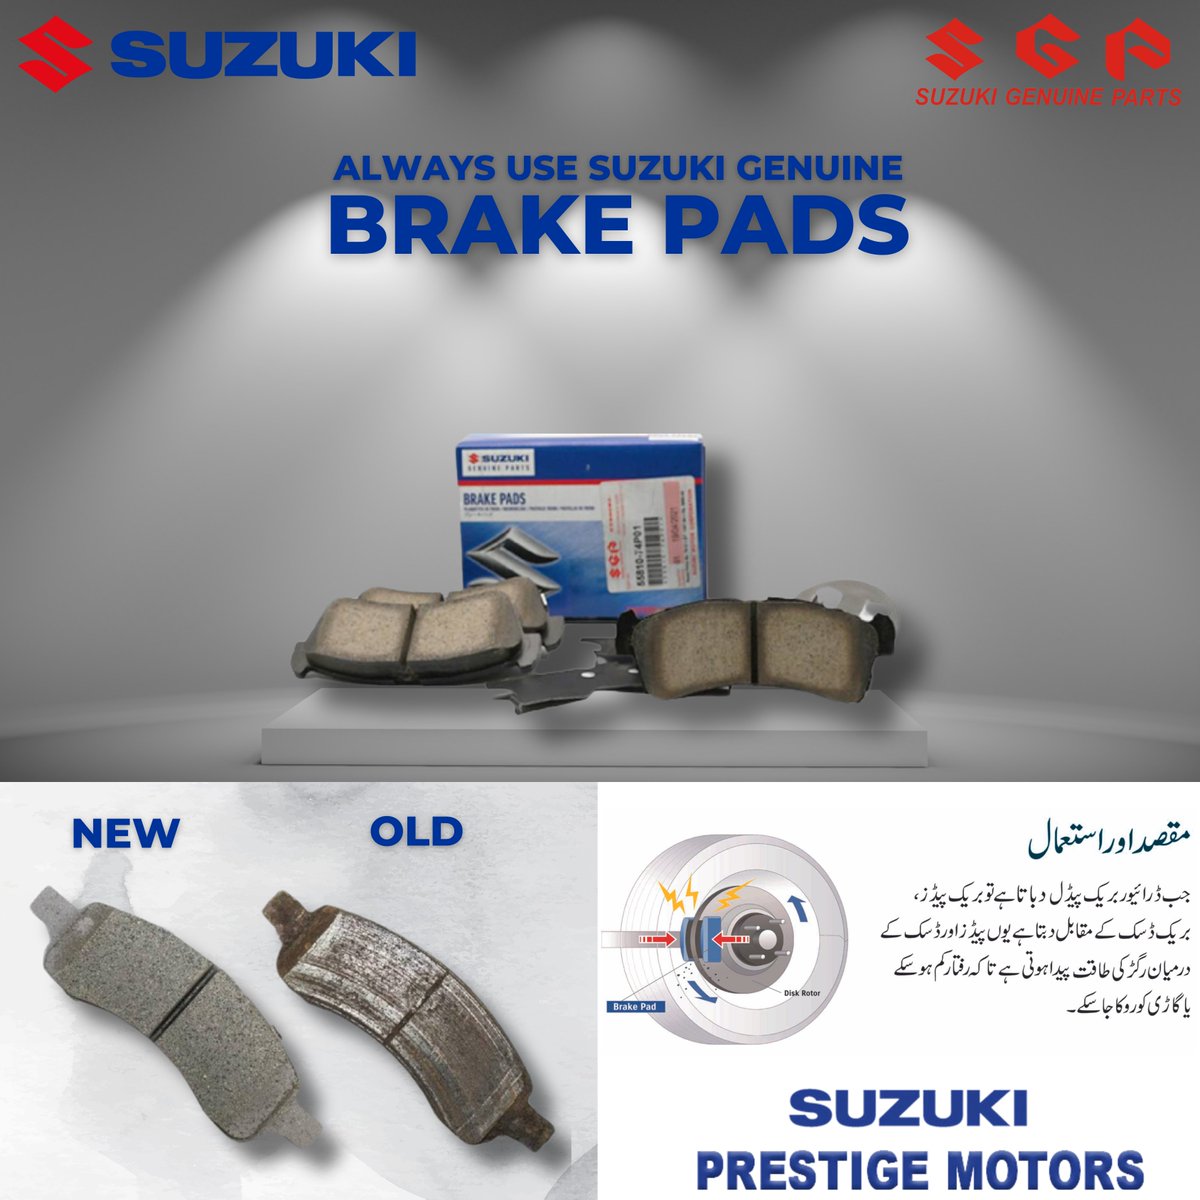 Always Use Suzuki Genuine Brake Pads for your Suzuki
#suzuki #SuzukiPakistan #PakSuzuki #Pakistan #likeforlikes #likesforlike #SharePost #ShareThisPost #comment #suzukigenuineparts #GenuineParts #genuine #foryou